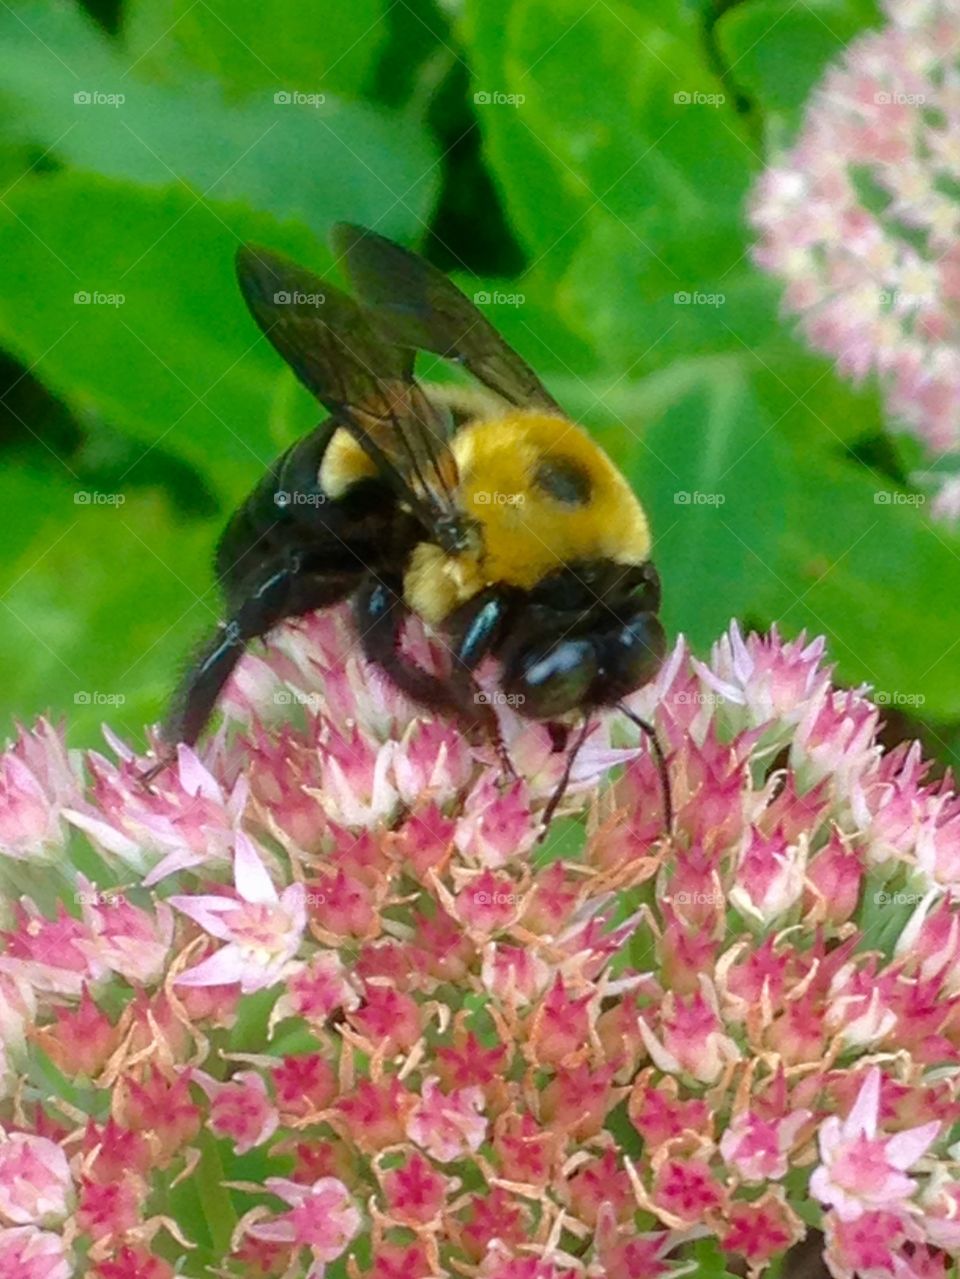 Bumblebee on the prowl